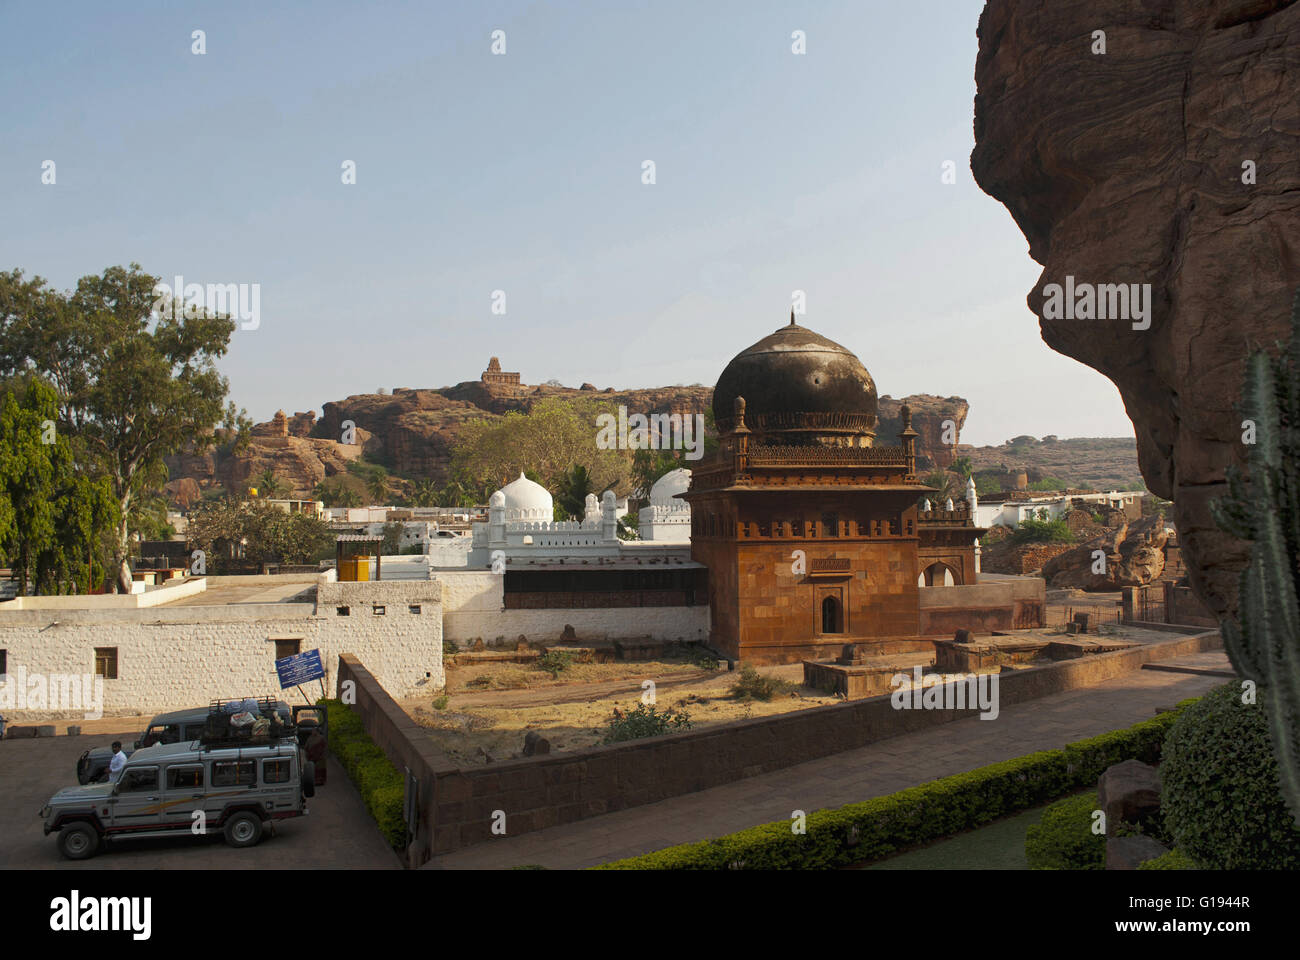 Vue d'une mosquée près de la grotte, Badami, Karanataka, Inde. Badami fort est vu dans la distance. Banque D'Images